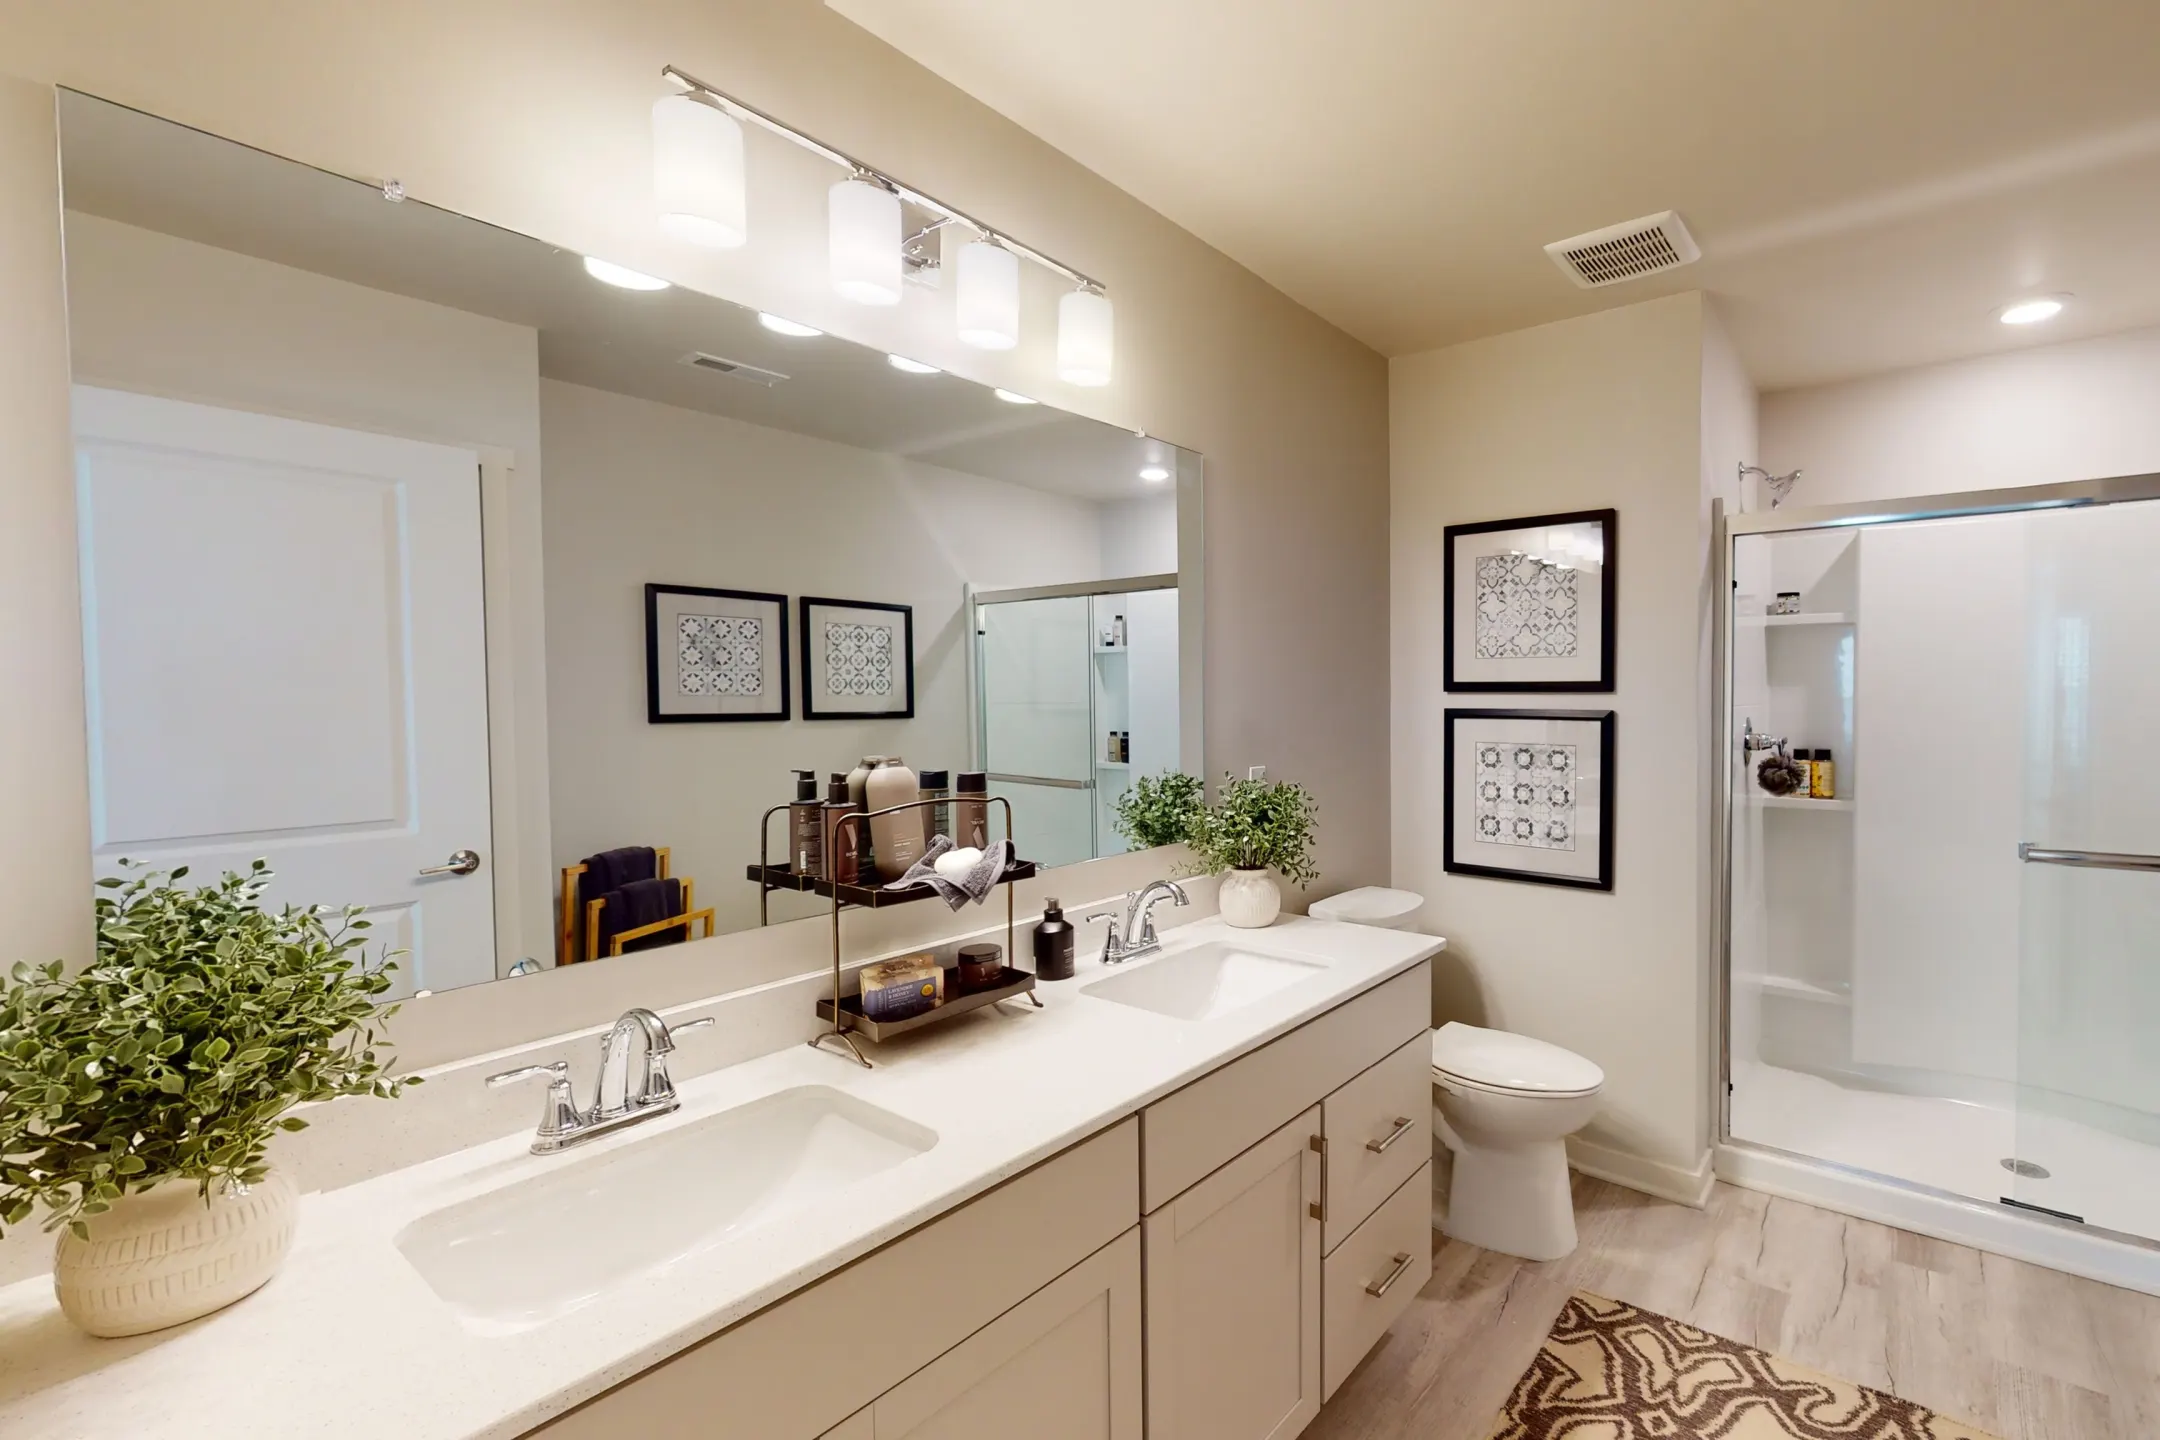 Bathroom - Insignia Apartments - Clarkston, MI